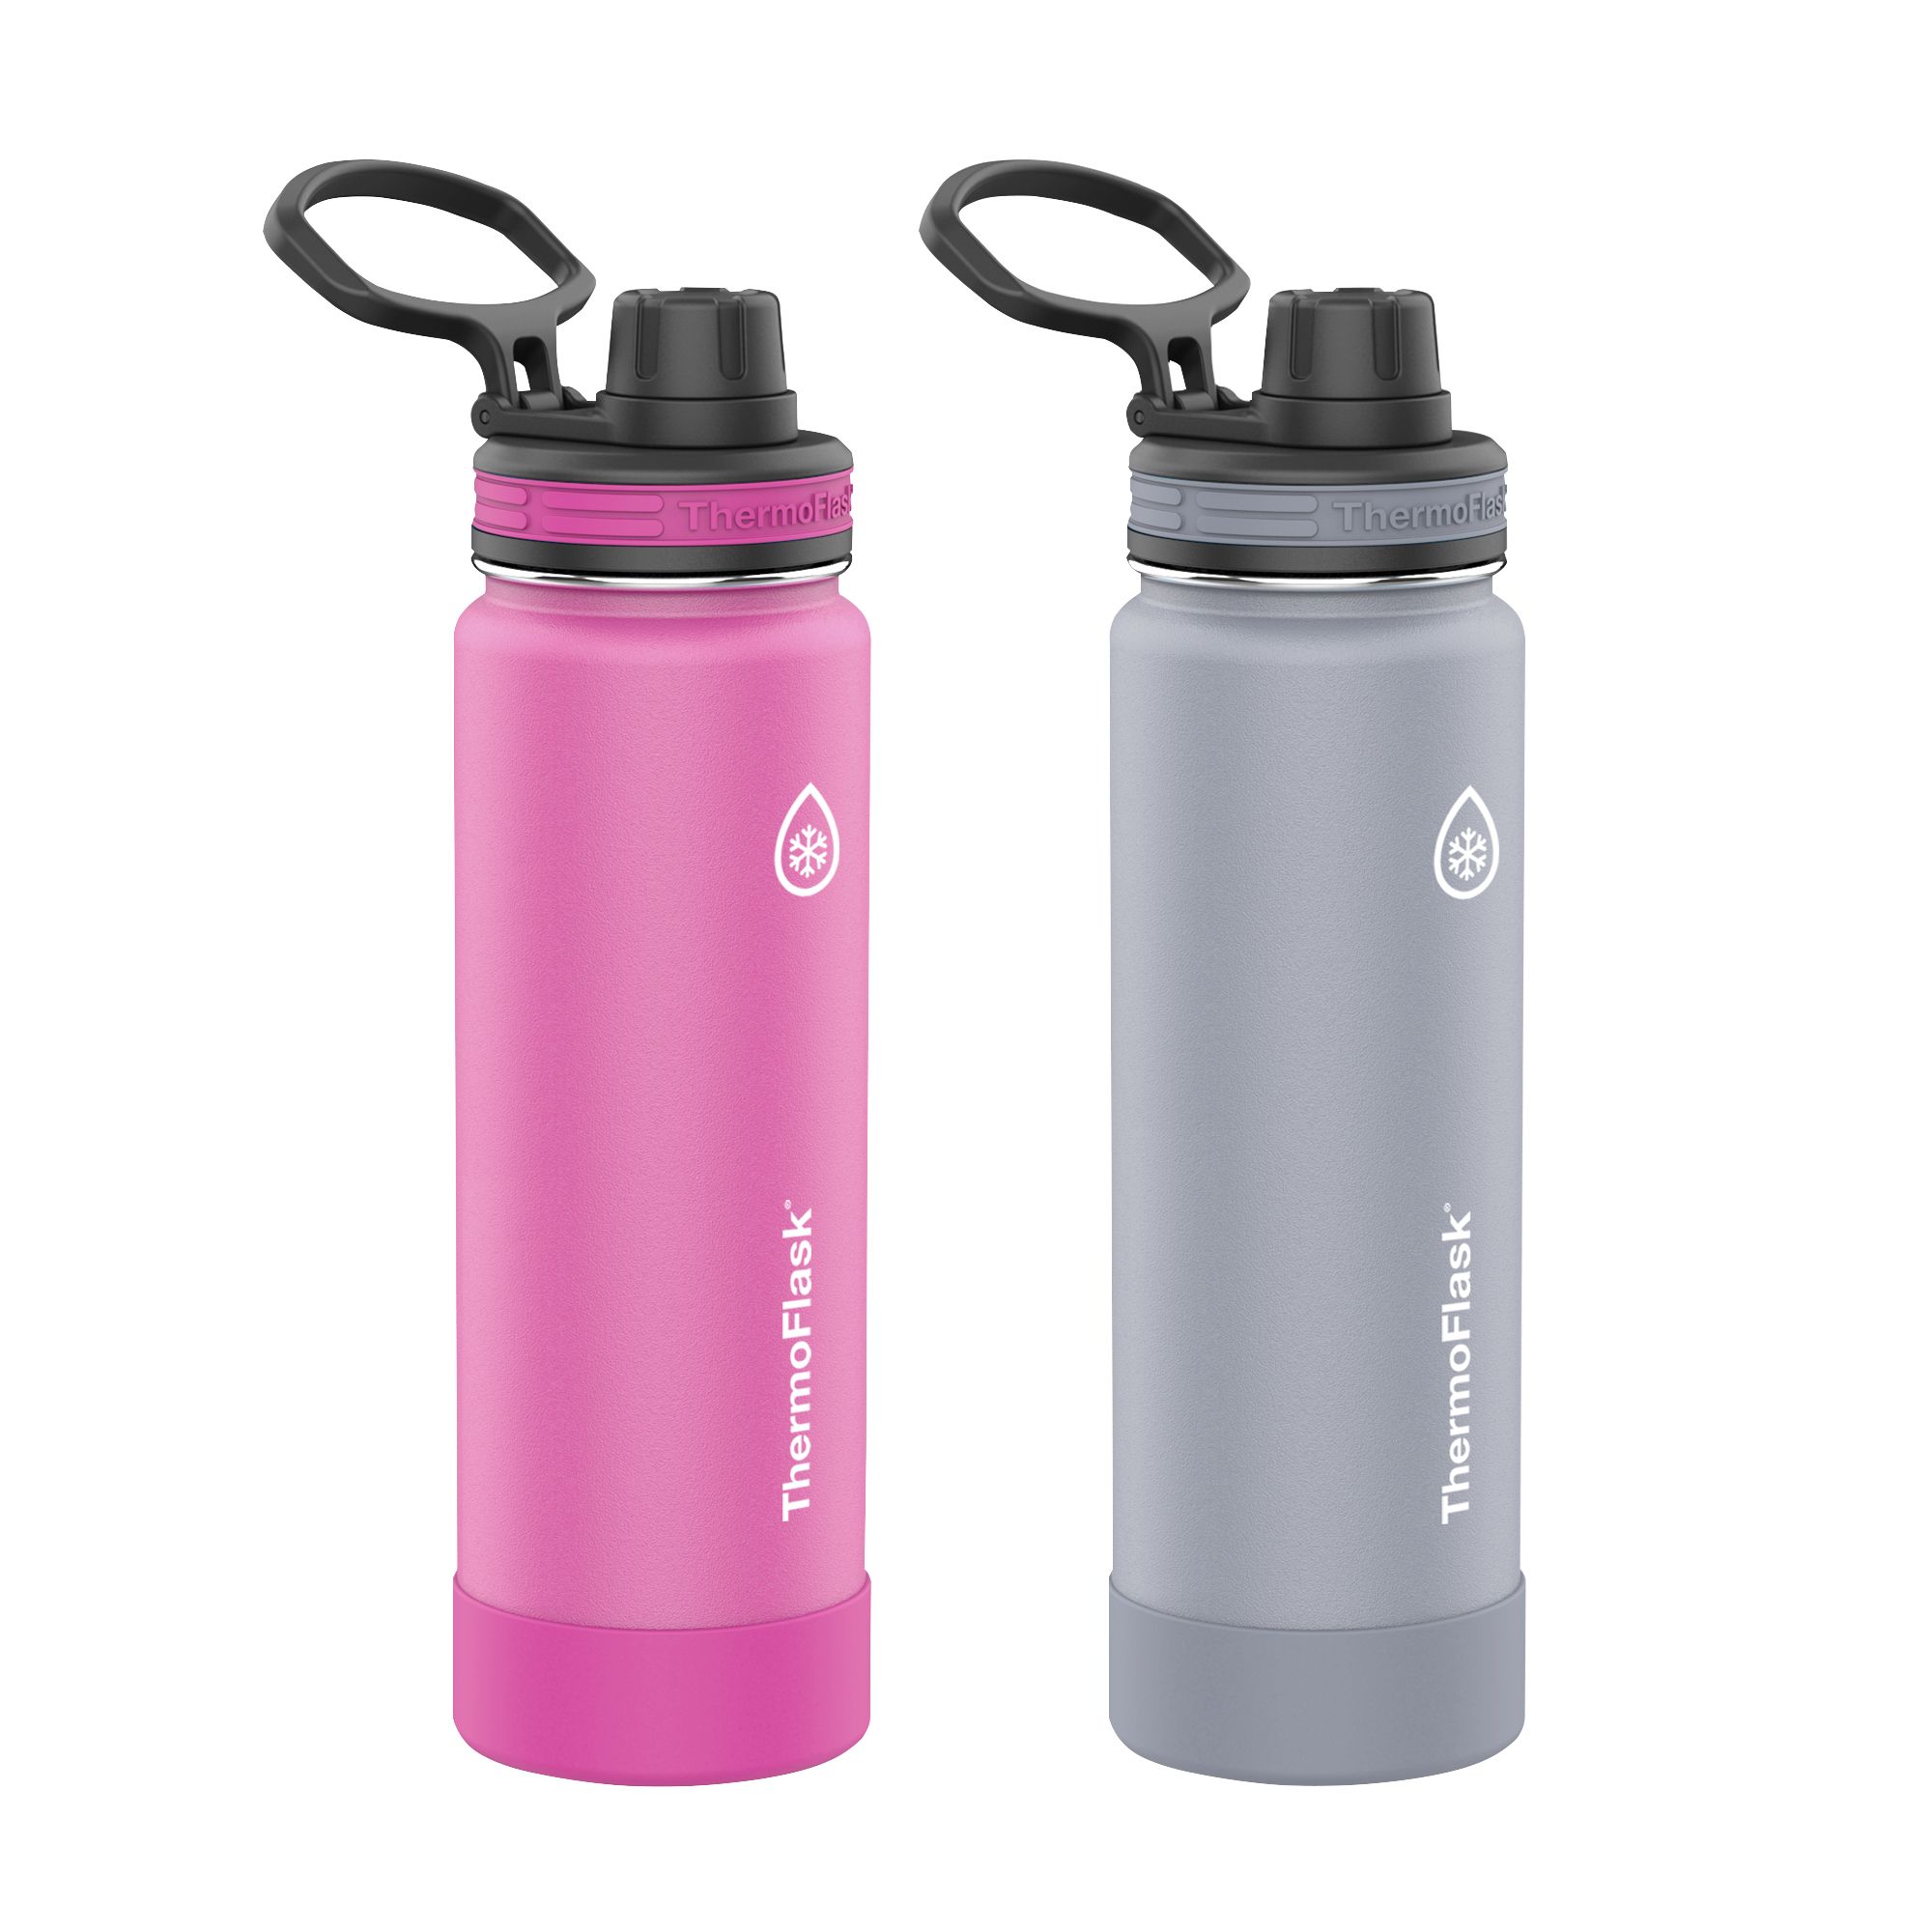 Berkley Jensen Stainless Steel Water Bottle, 2 Pk. - Pink and Gray